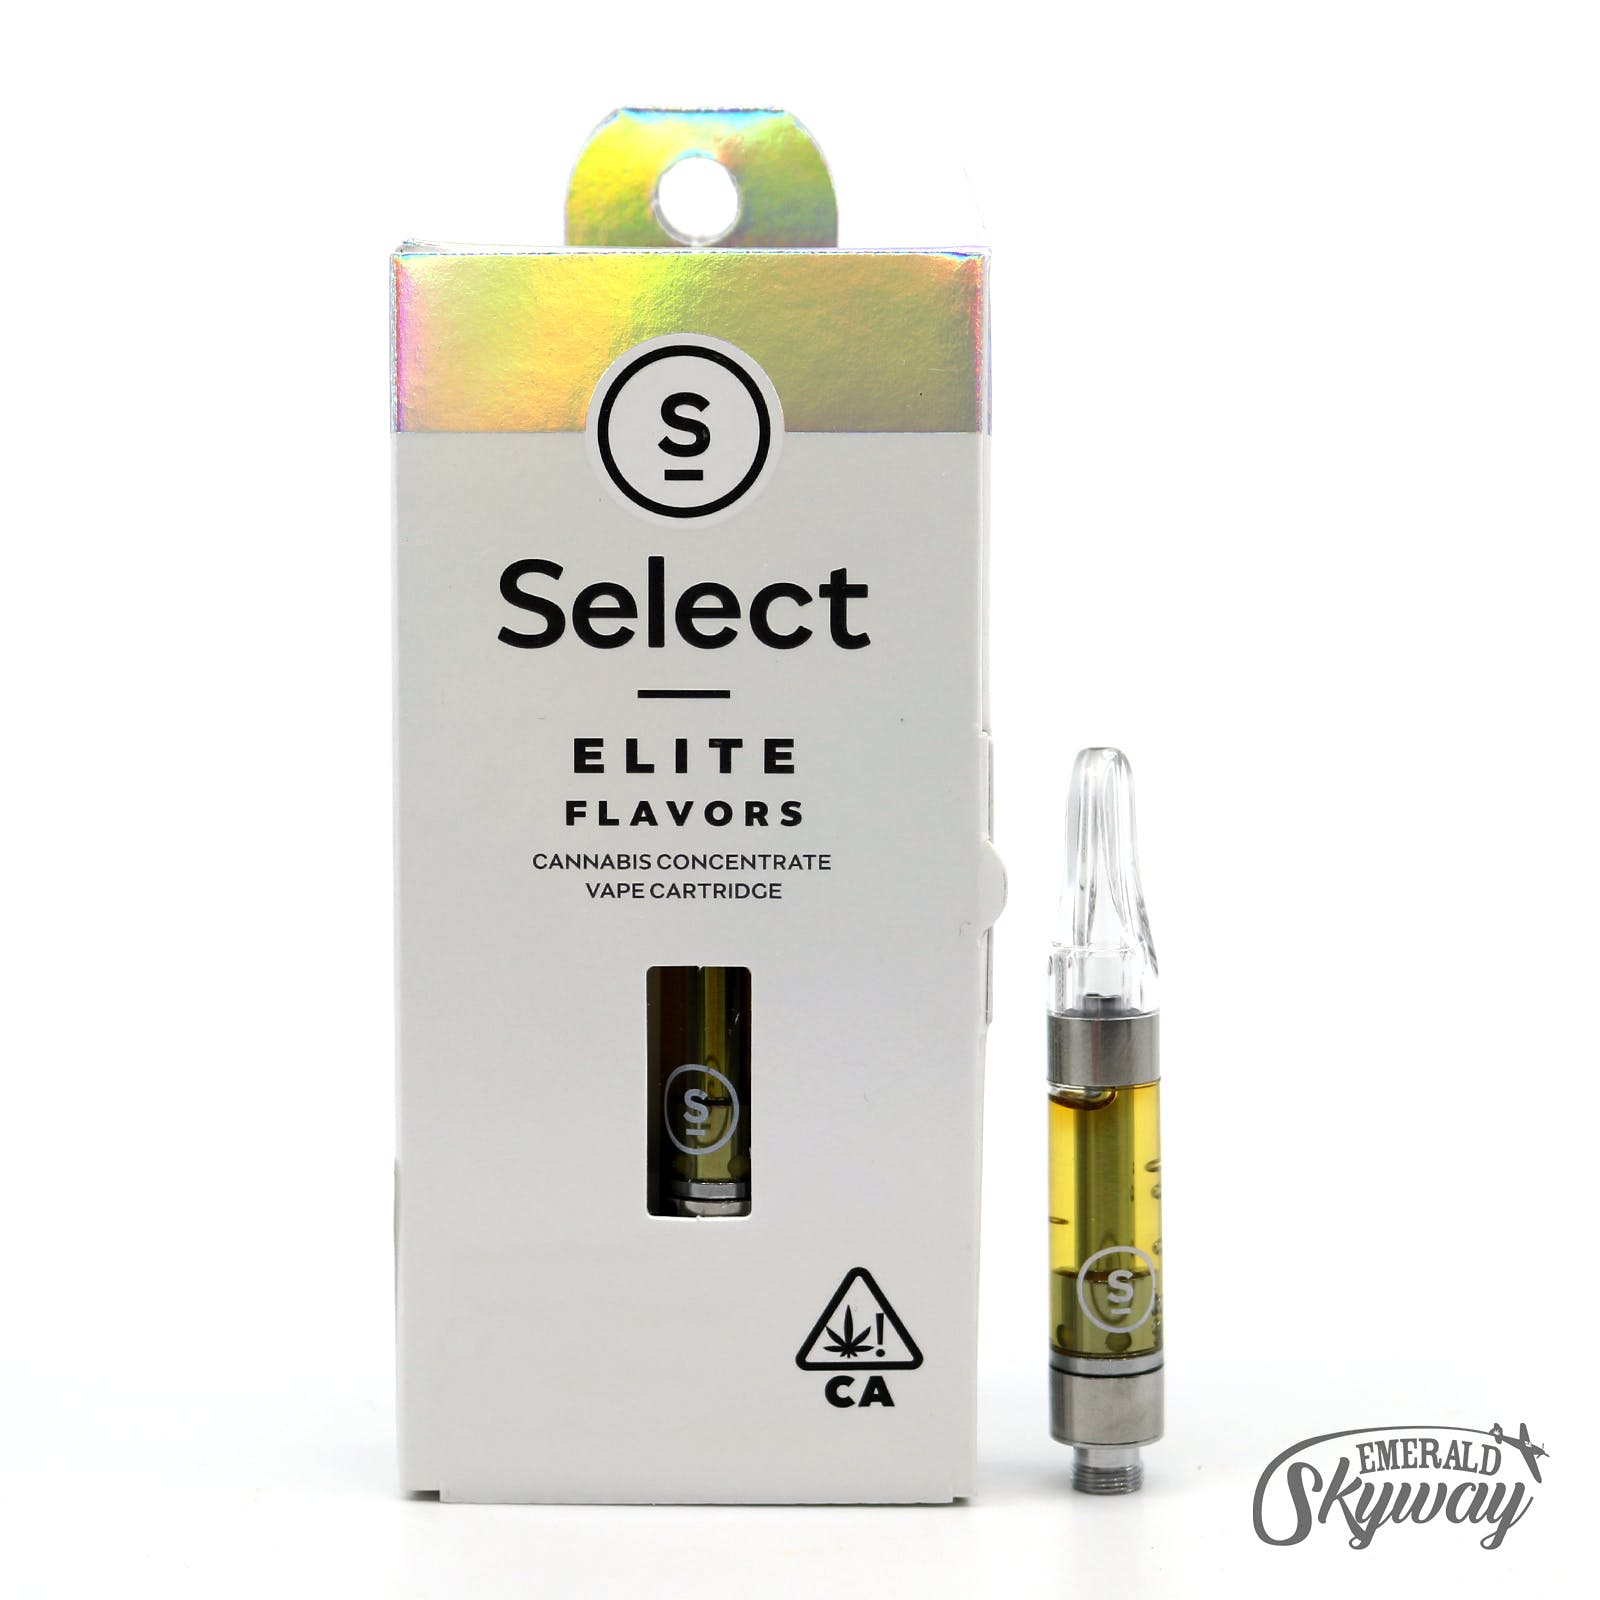 Select: Elite Flavors Cartridge - Orange Cream 1,000mg